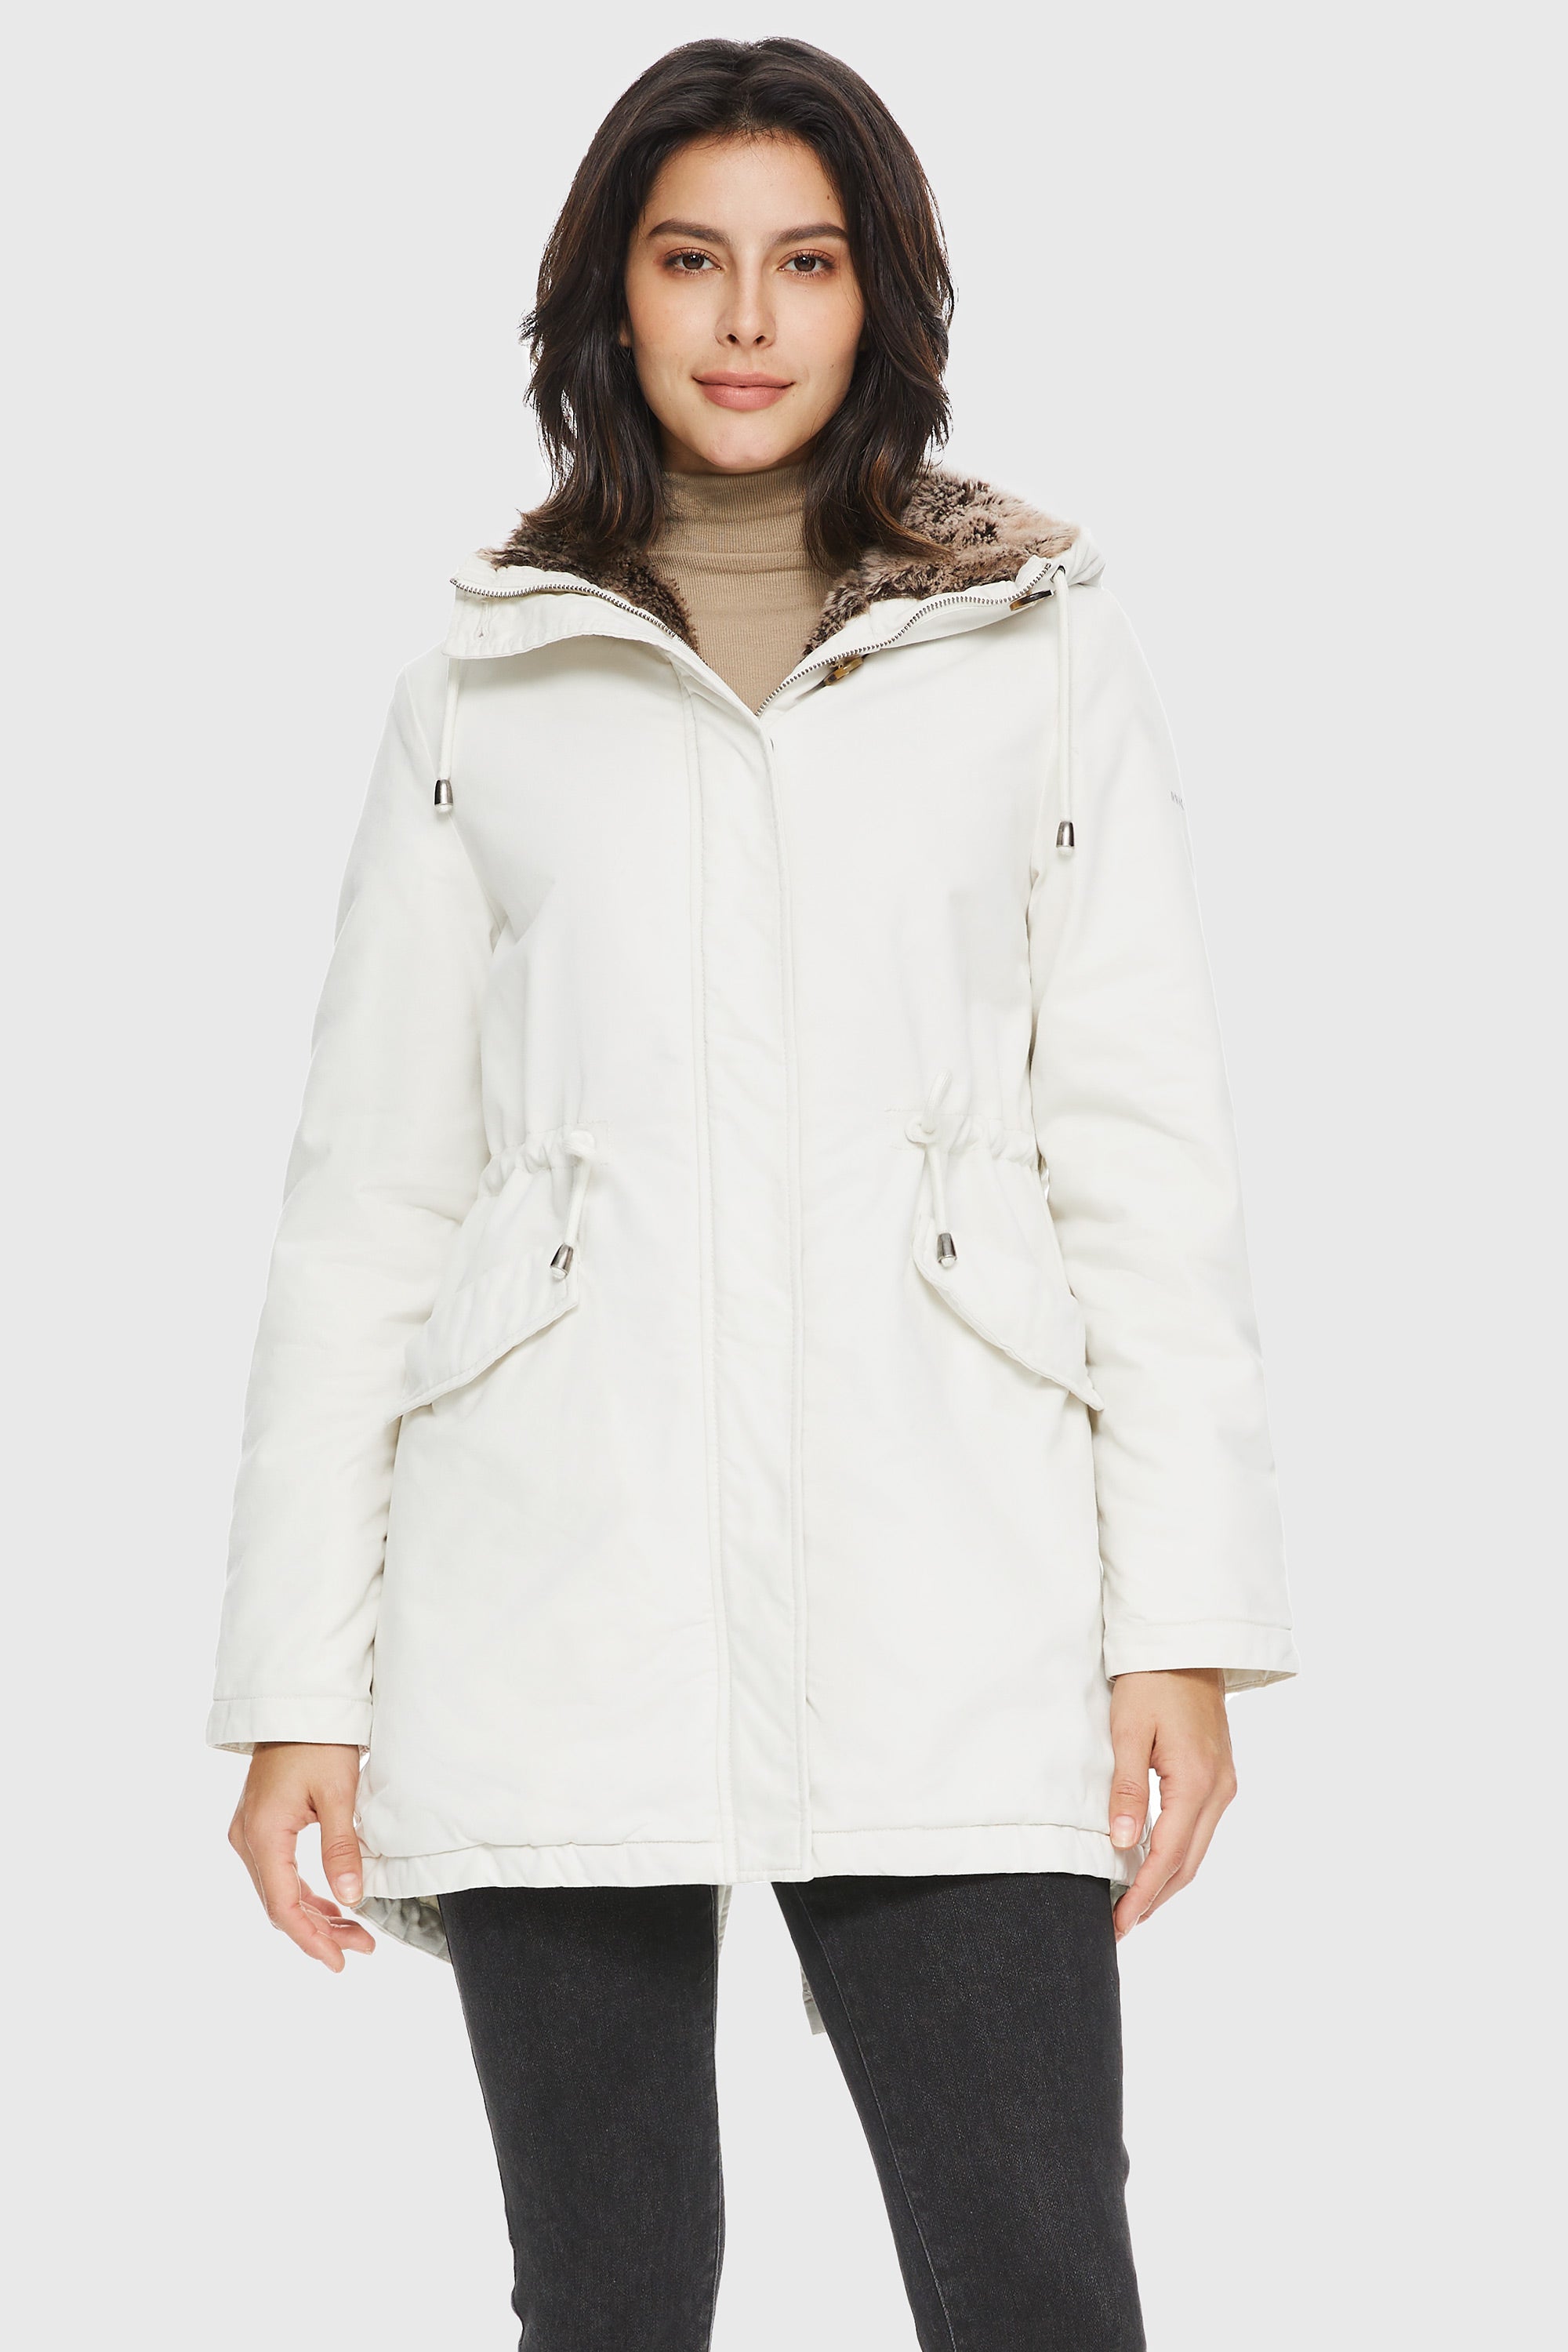 Khaki & White Fur Hood Fleece lined Parka Coats - Buy Fashion Wholesale in  The UK